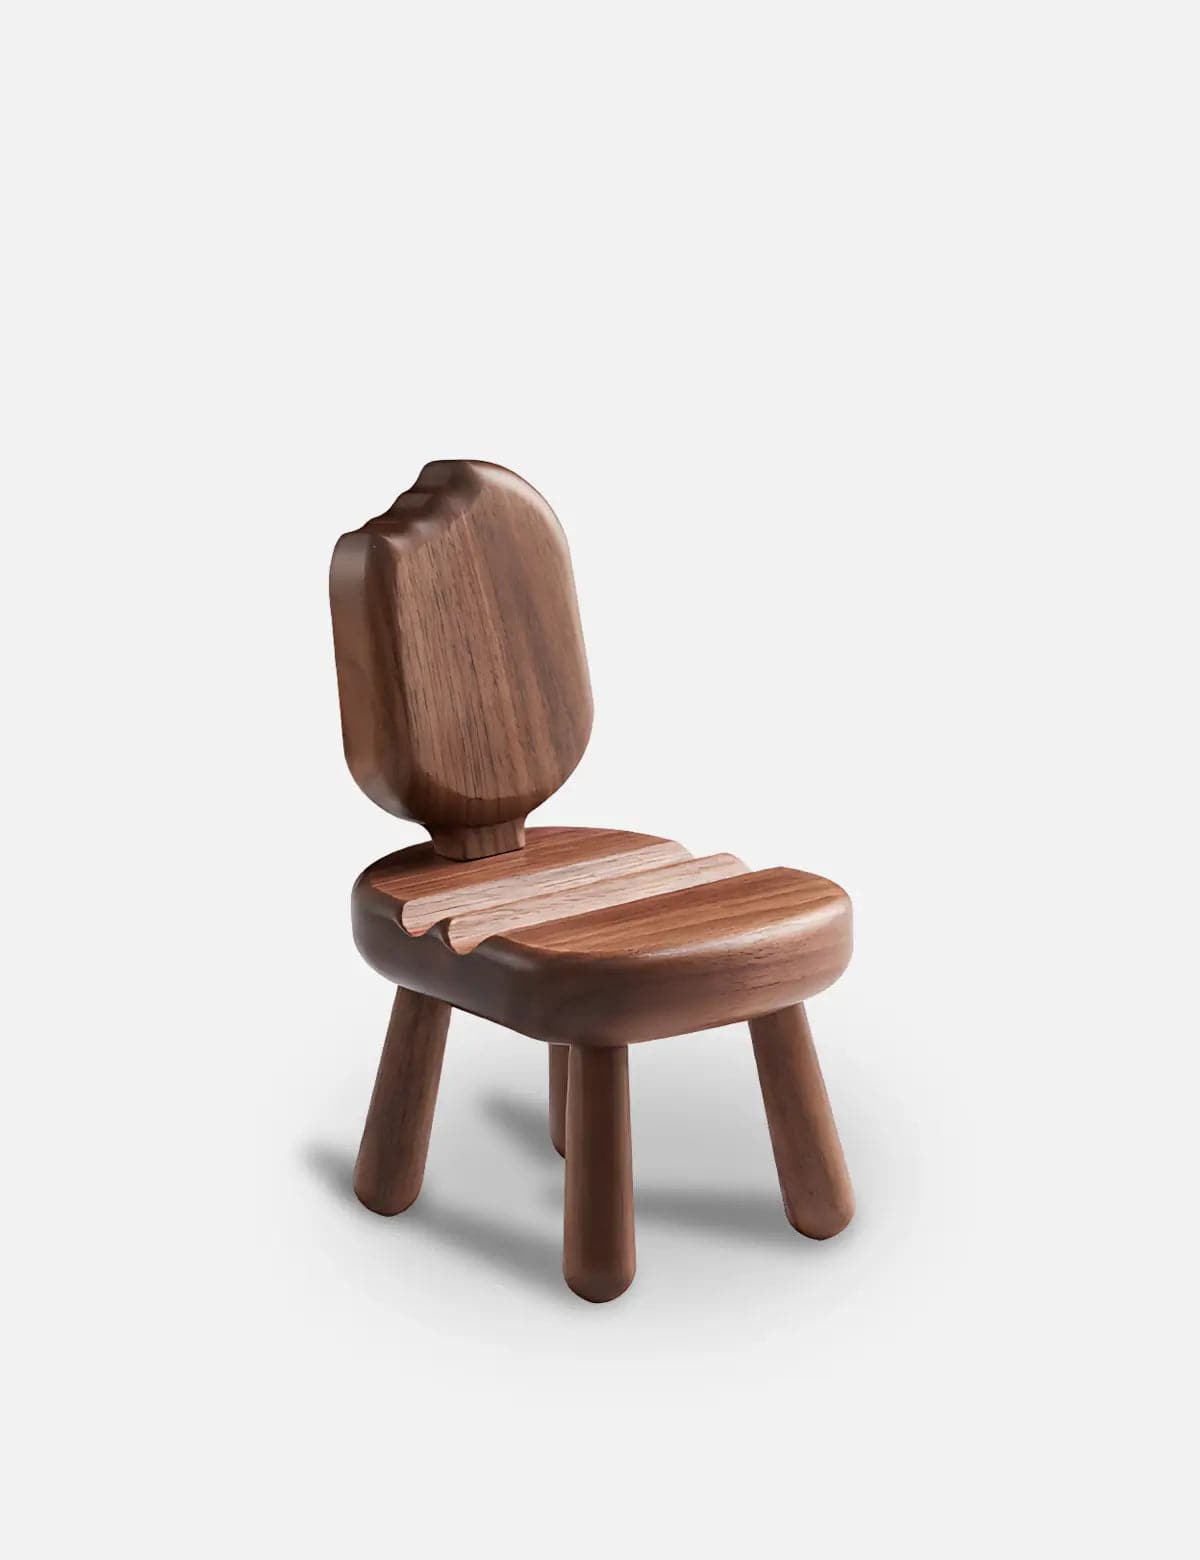 ice-cream-stool-wooden-phone-stand-decor-01